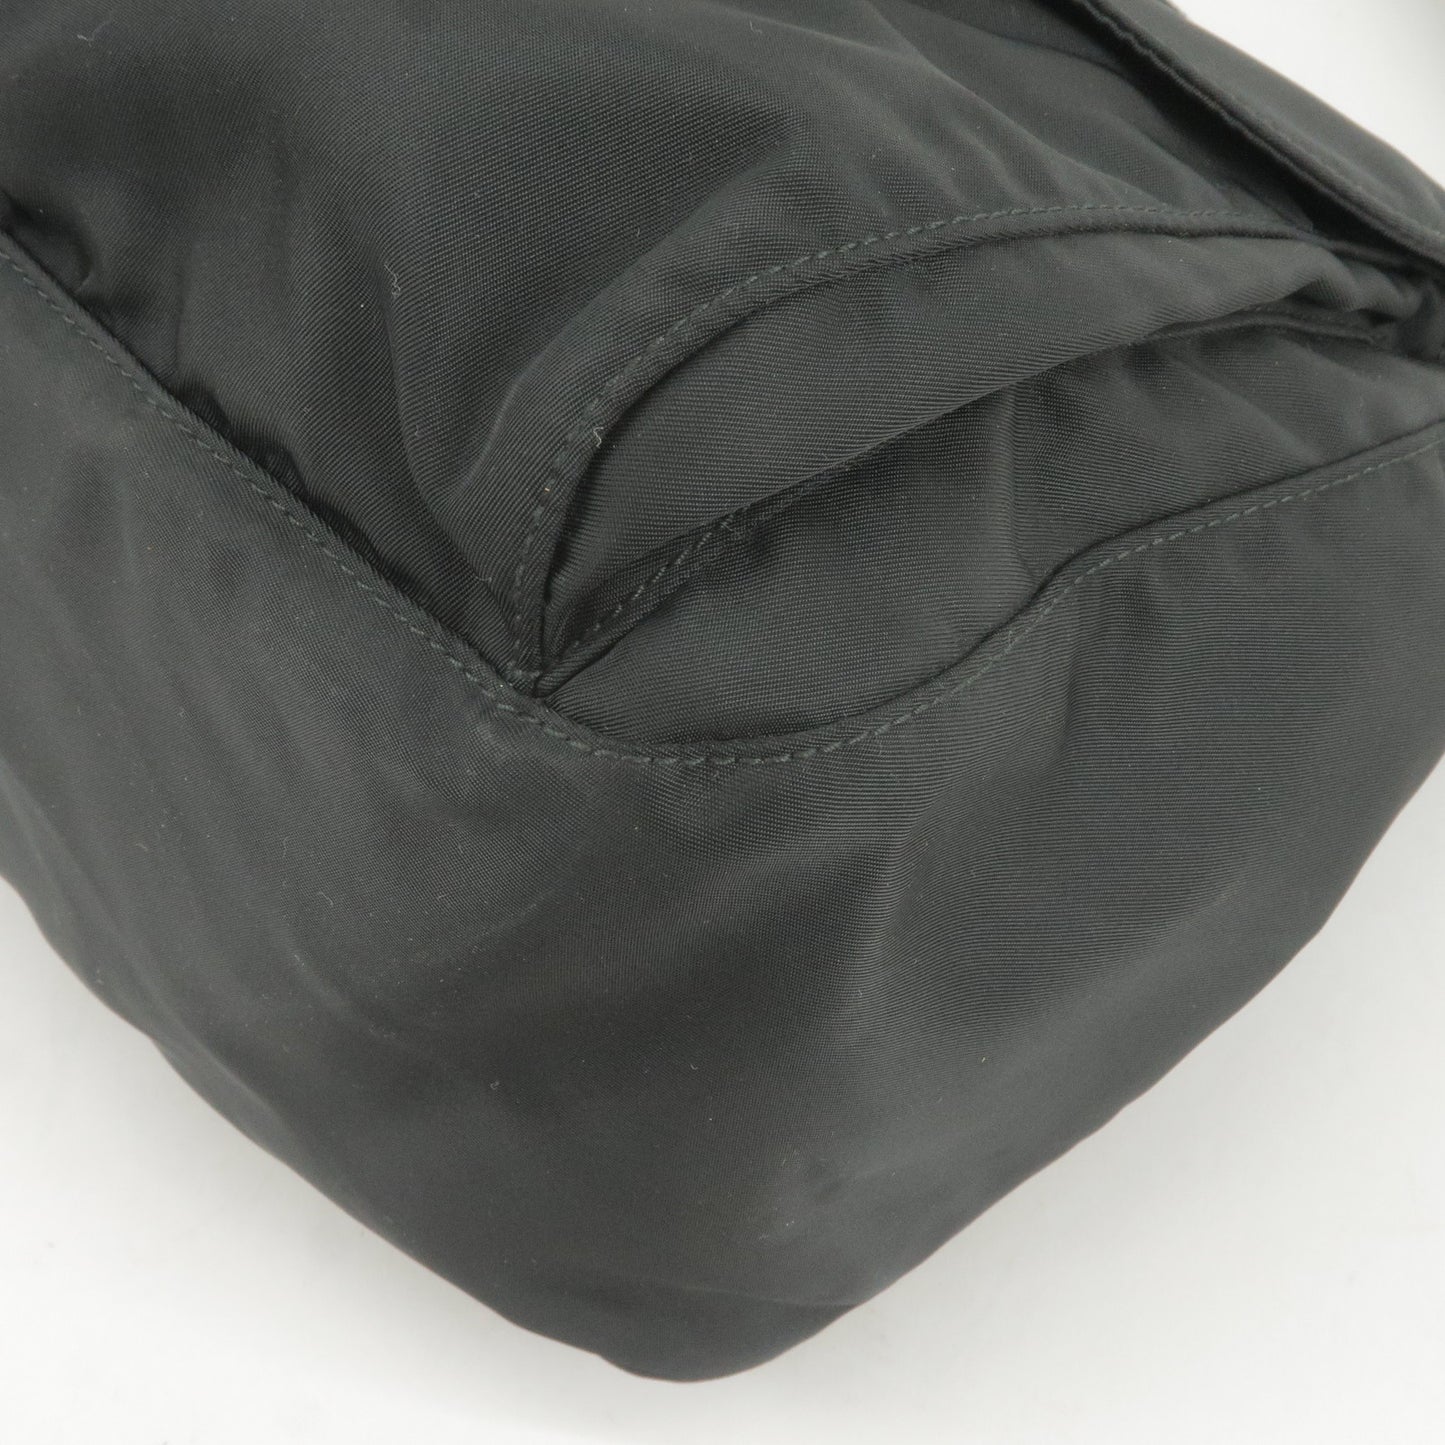 PRADA Logo Nylon Leather Shoulder Bag Crossbody Bag Black BT1738